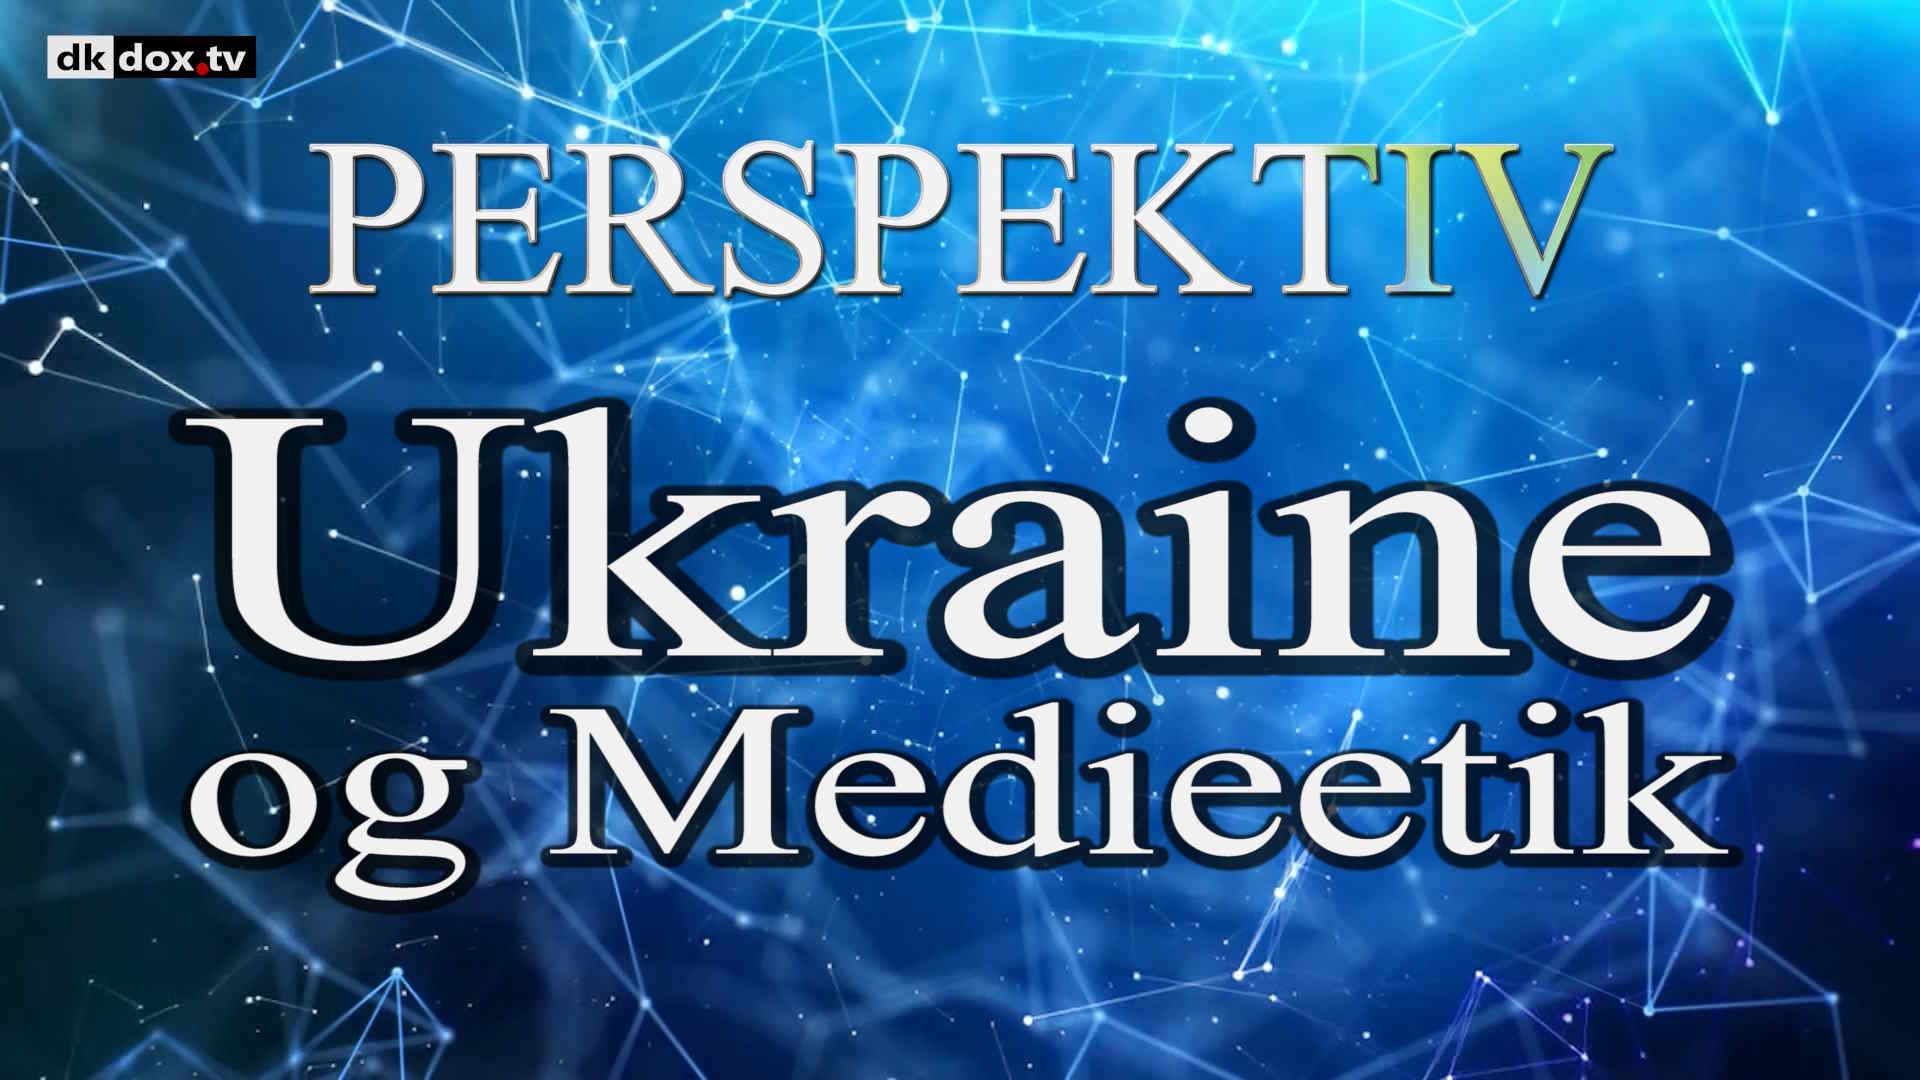 Ukraine og Medieetik